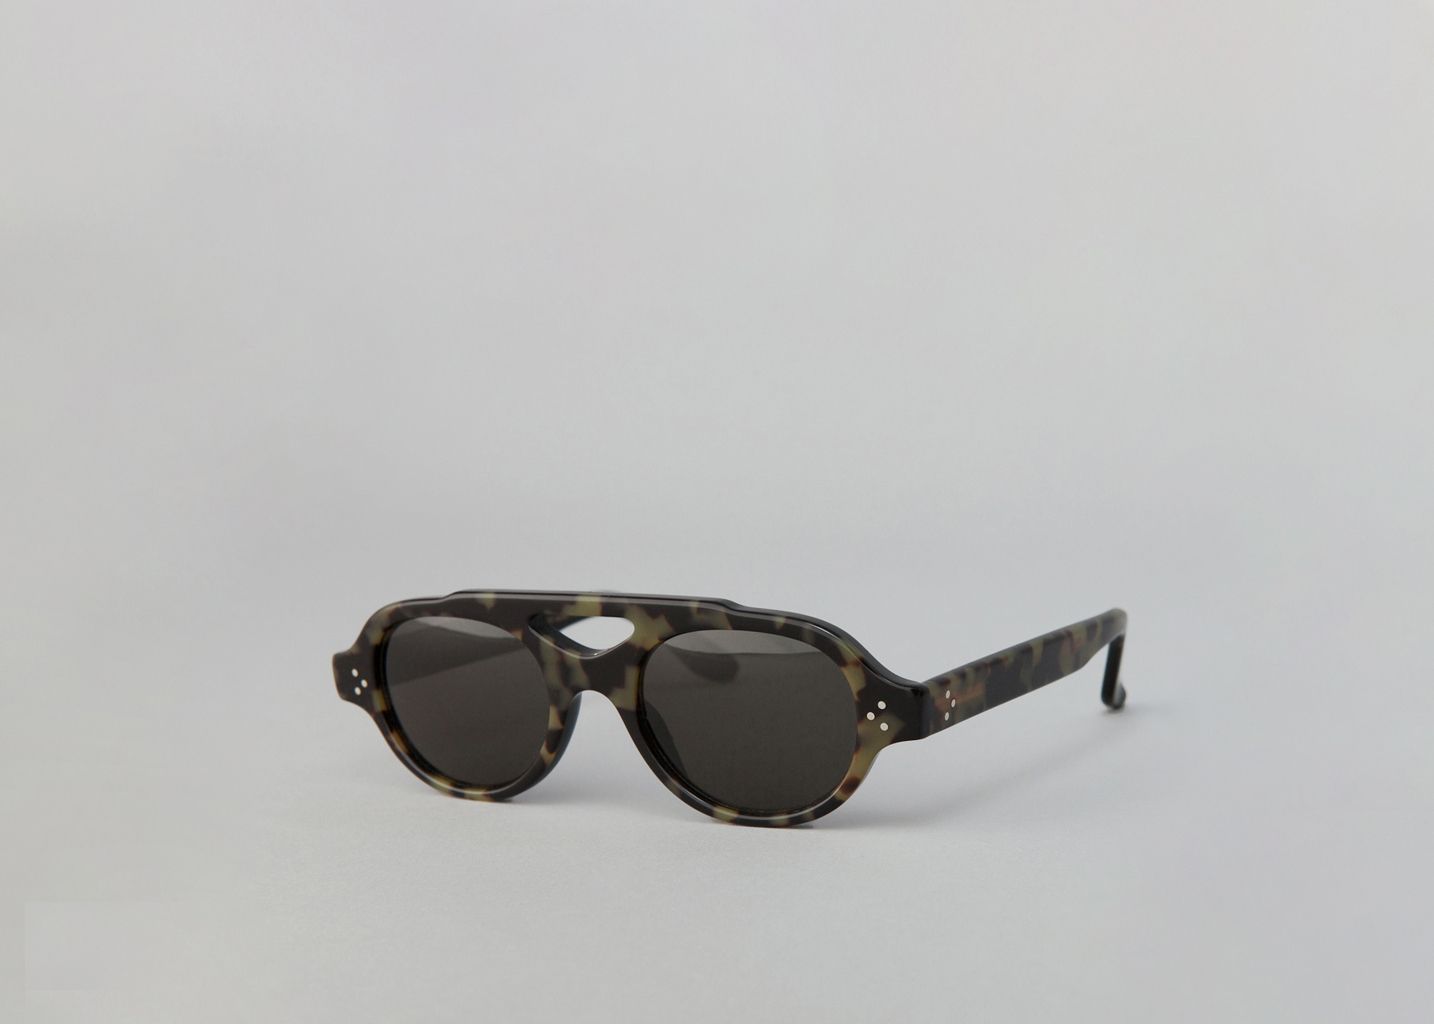 LTD Edition III Sunglasses - Lesca Lunetier